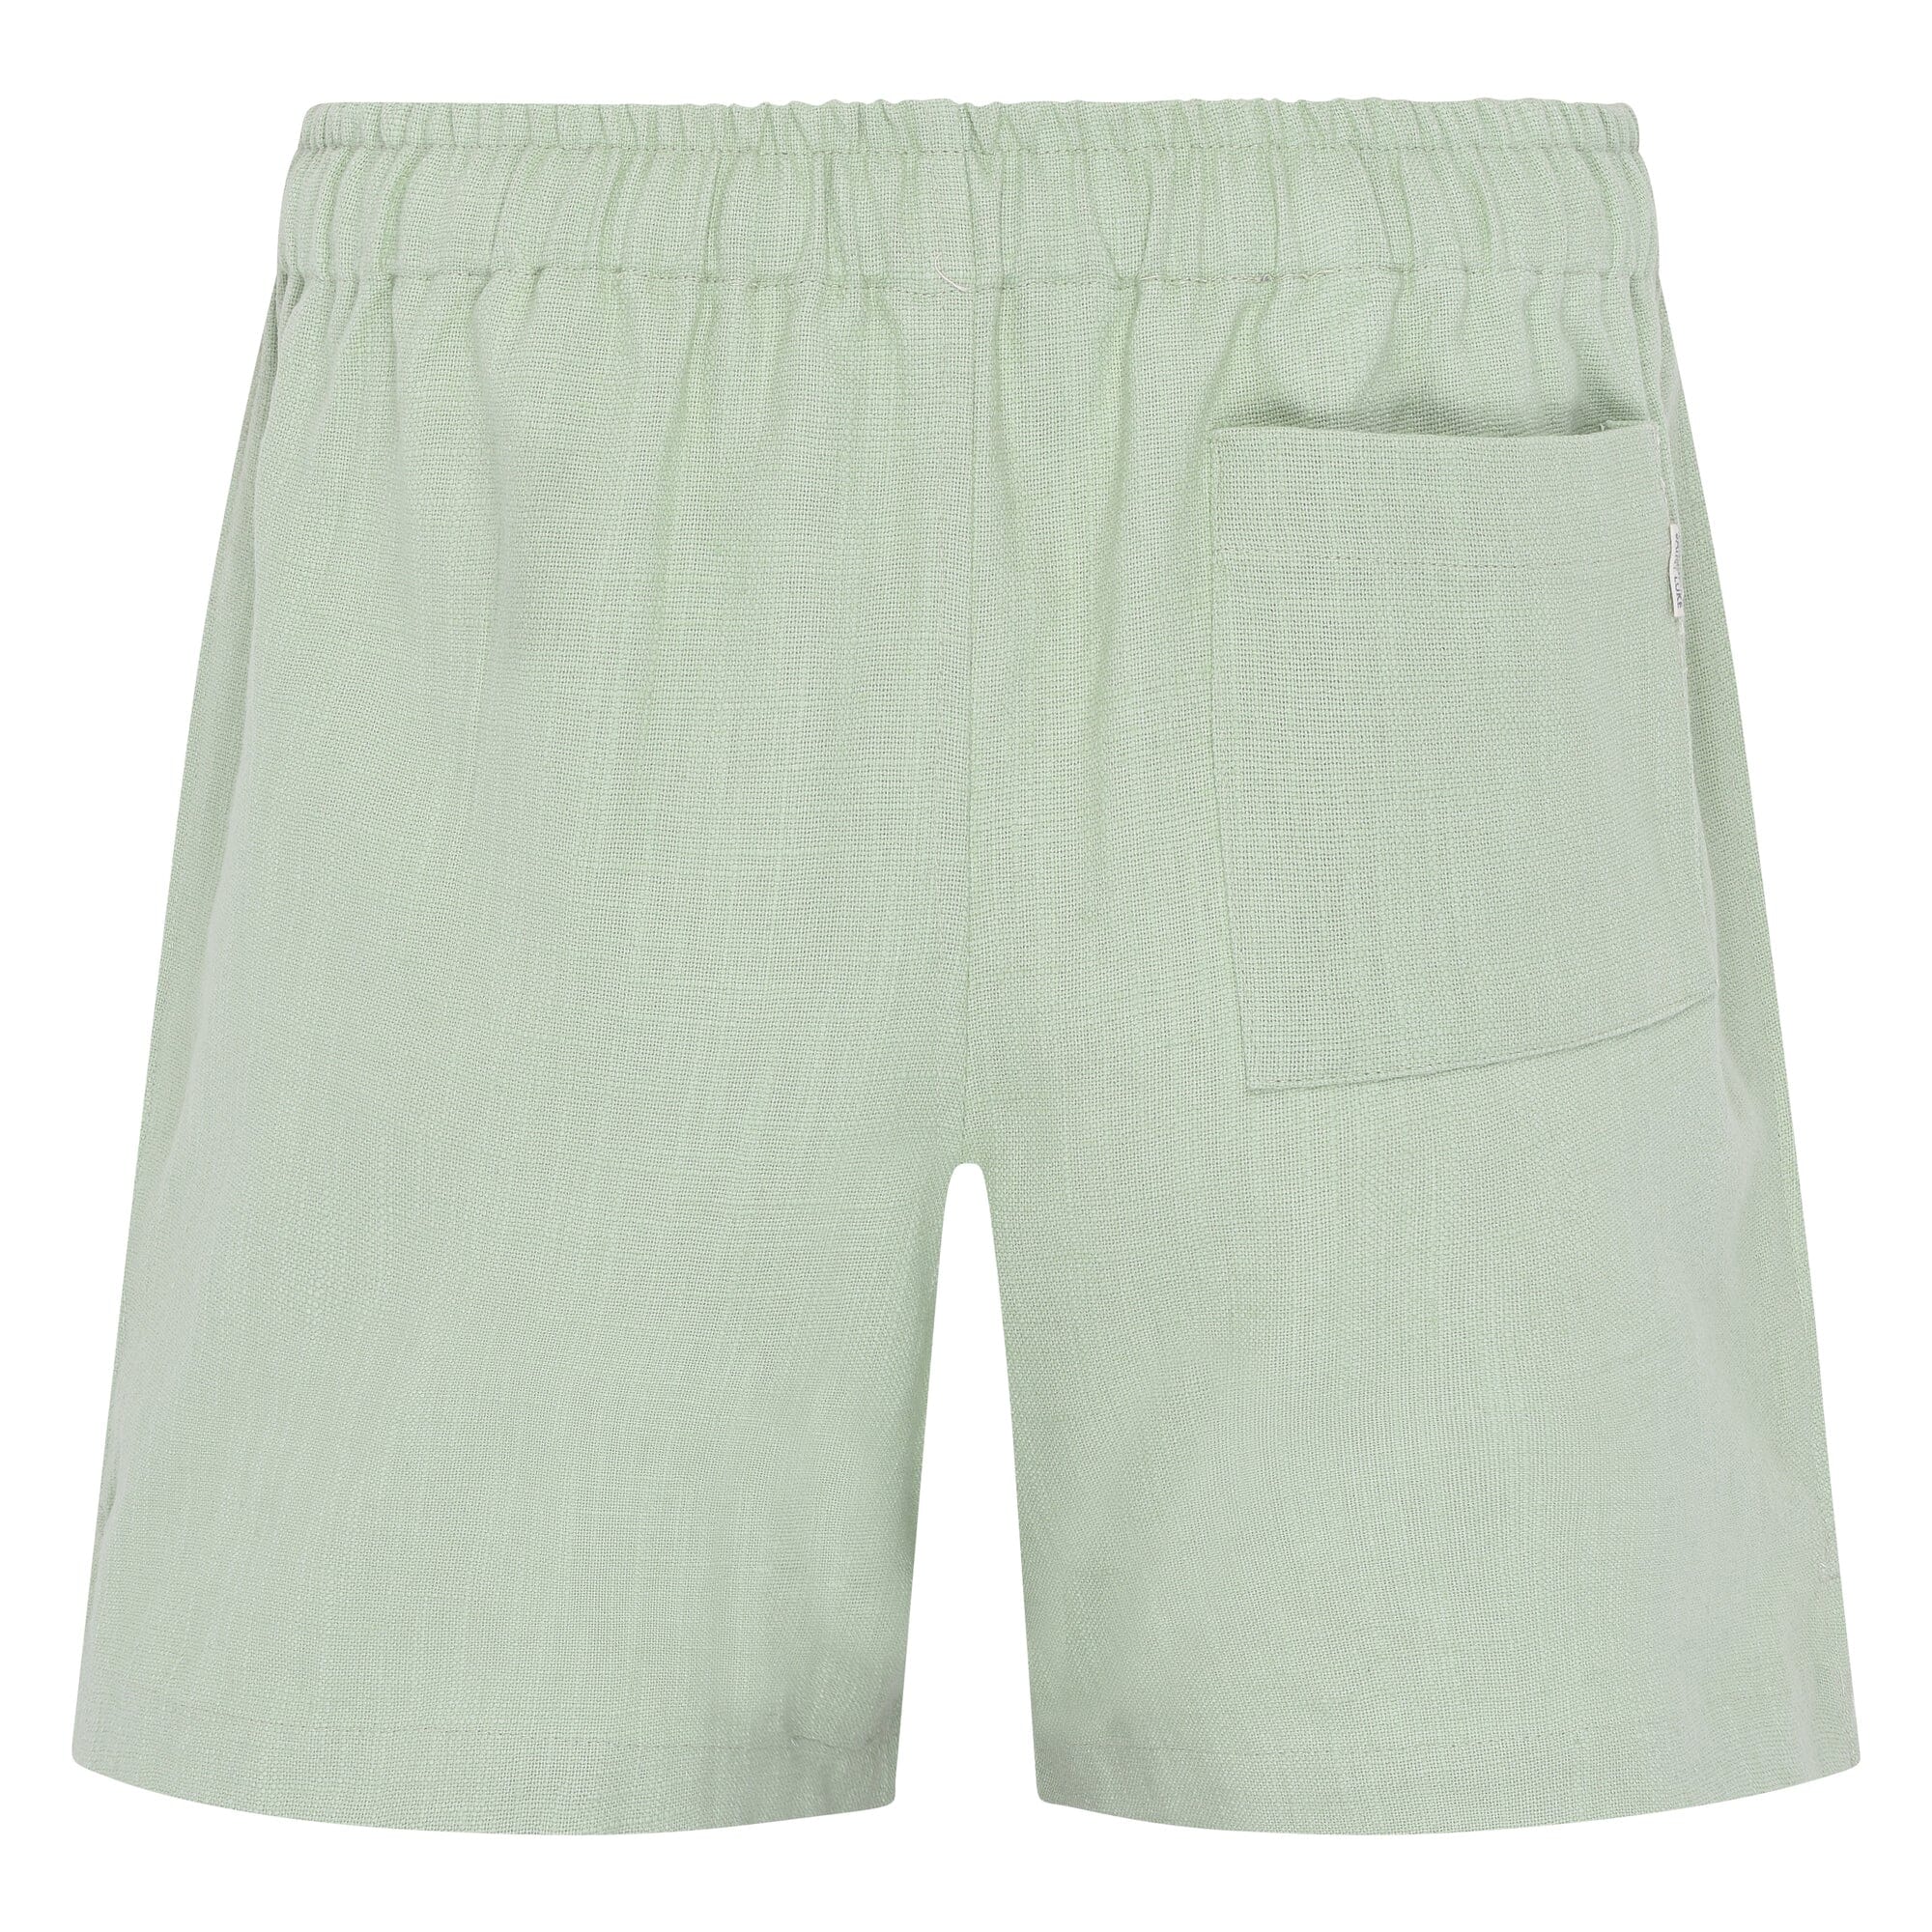 Veradero Drawstring Linen Shorts in Natural